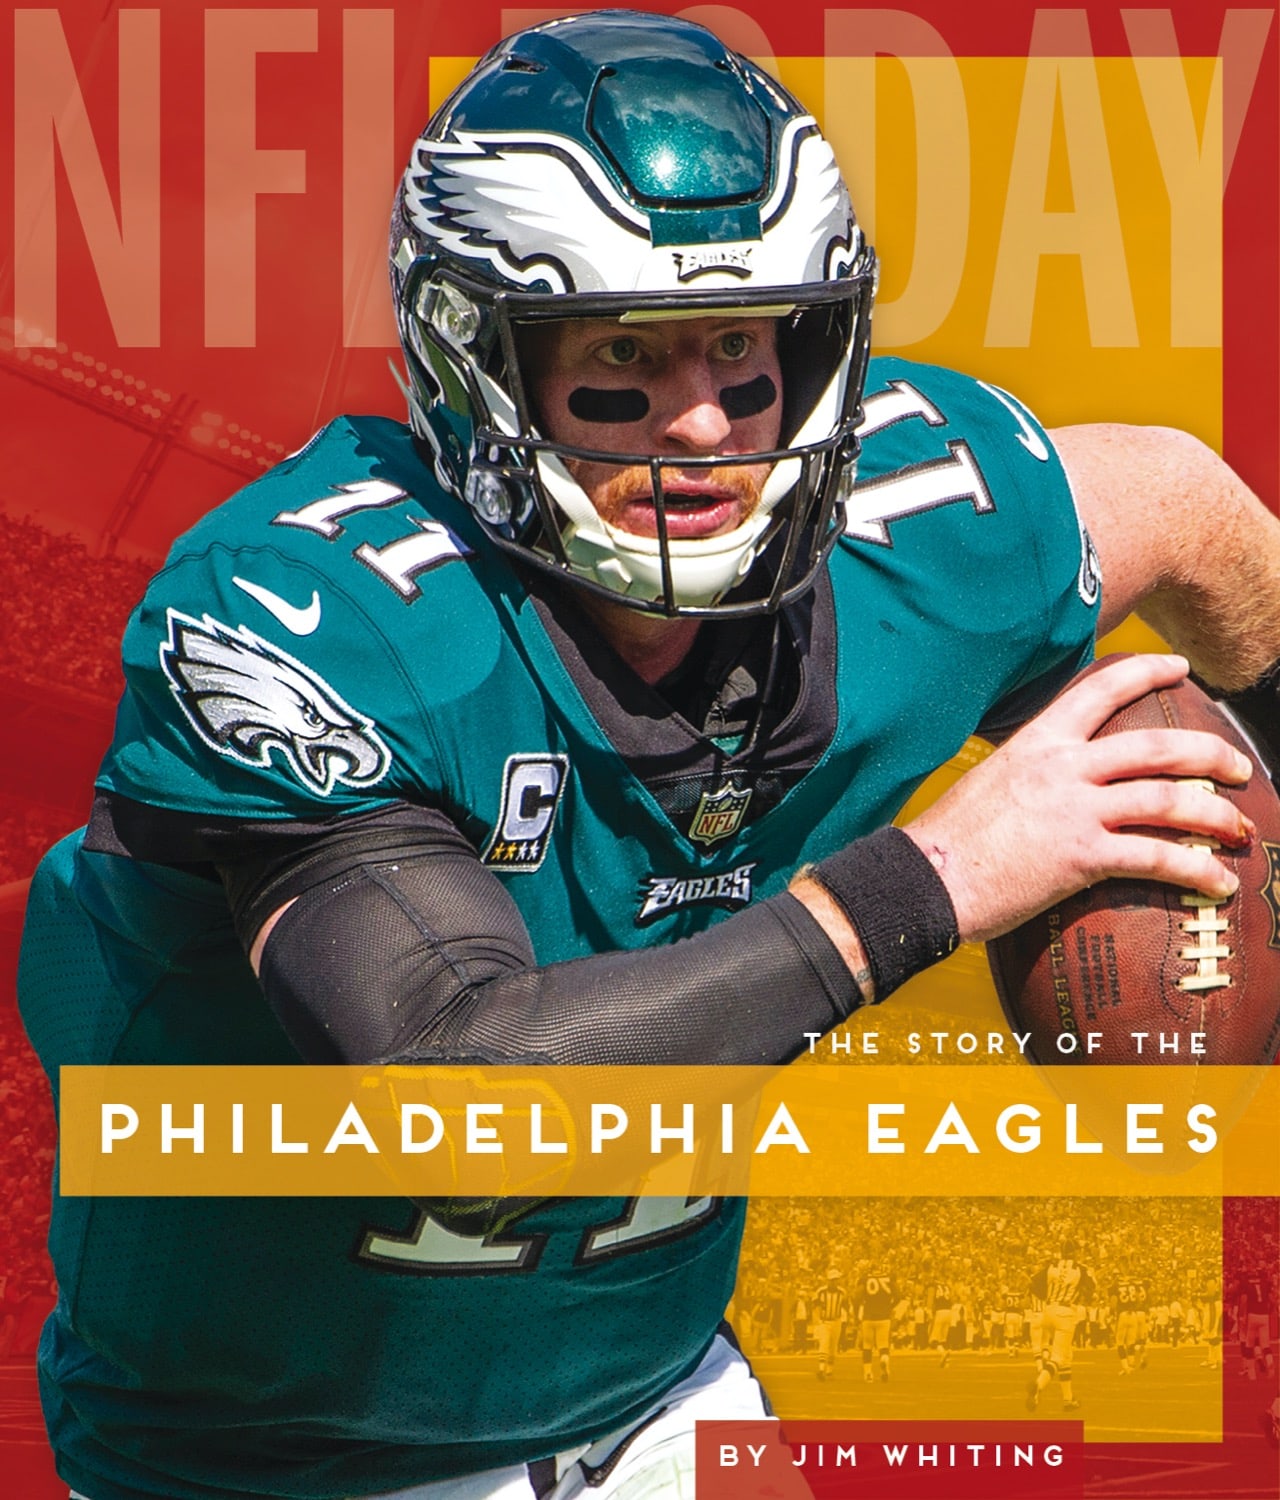 NFL Today: Philadelphia Eagles by The Creative Company Shop